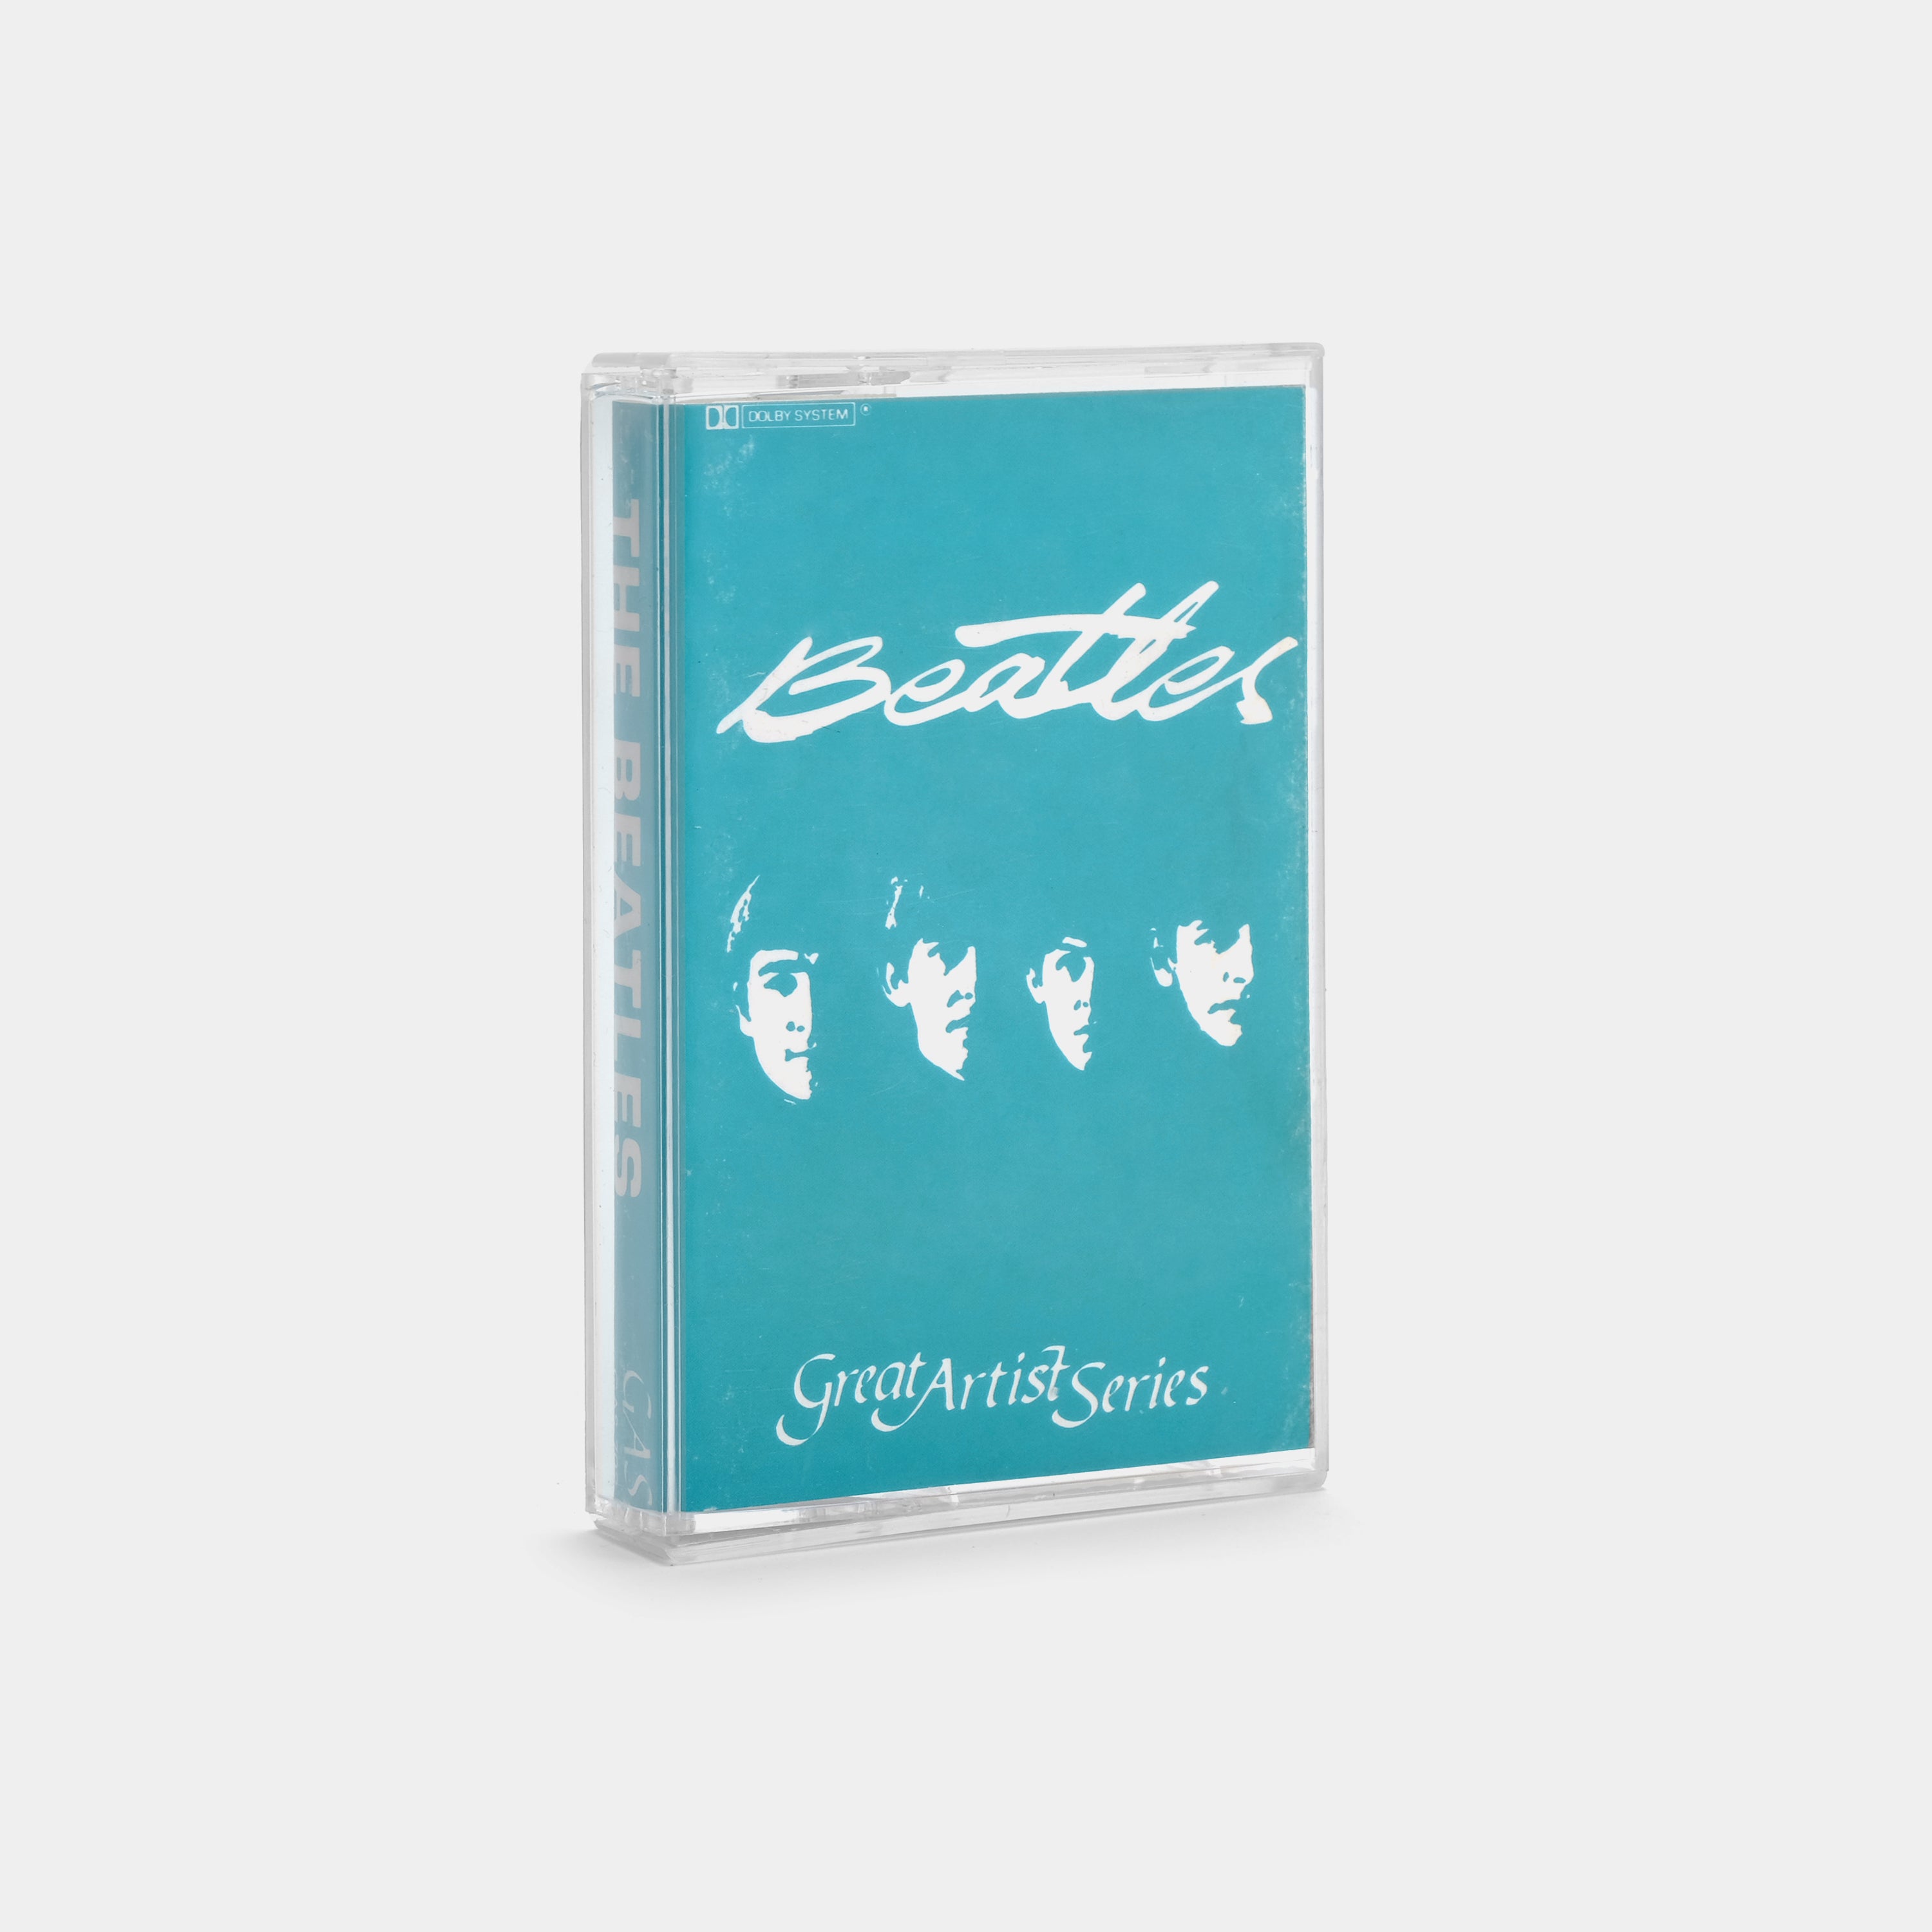 The Beatles - Volume 2 (Great Artist Series) Cassette Tape